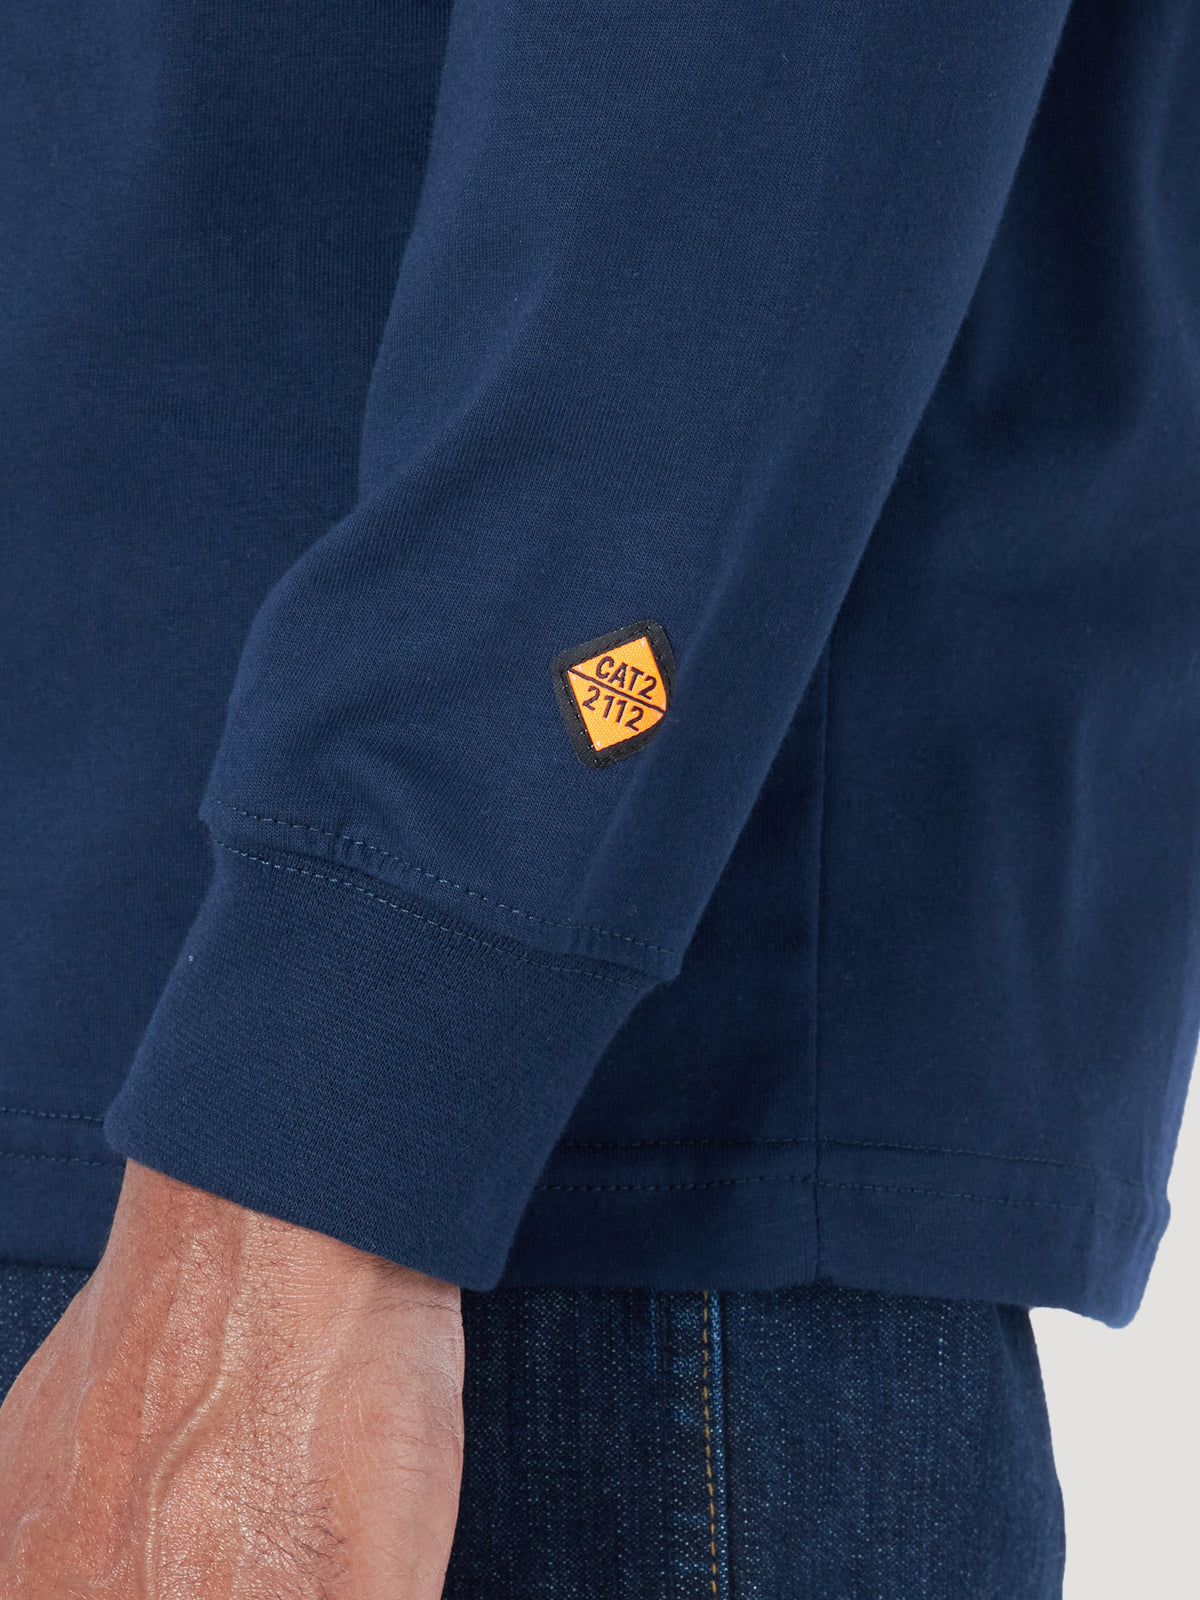 Men's Wrangler FR Flame Resistant Distressed Flag Navy Long Sleeve Shirt